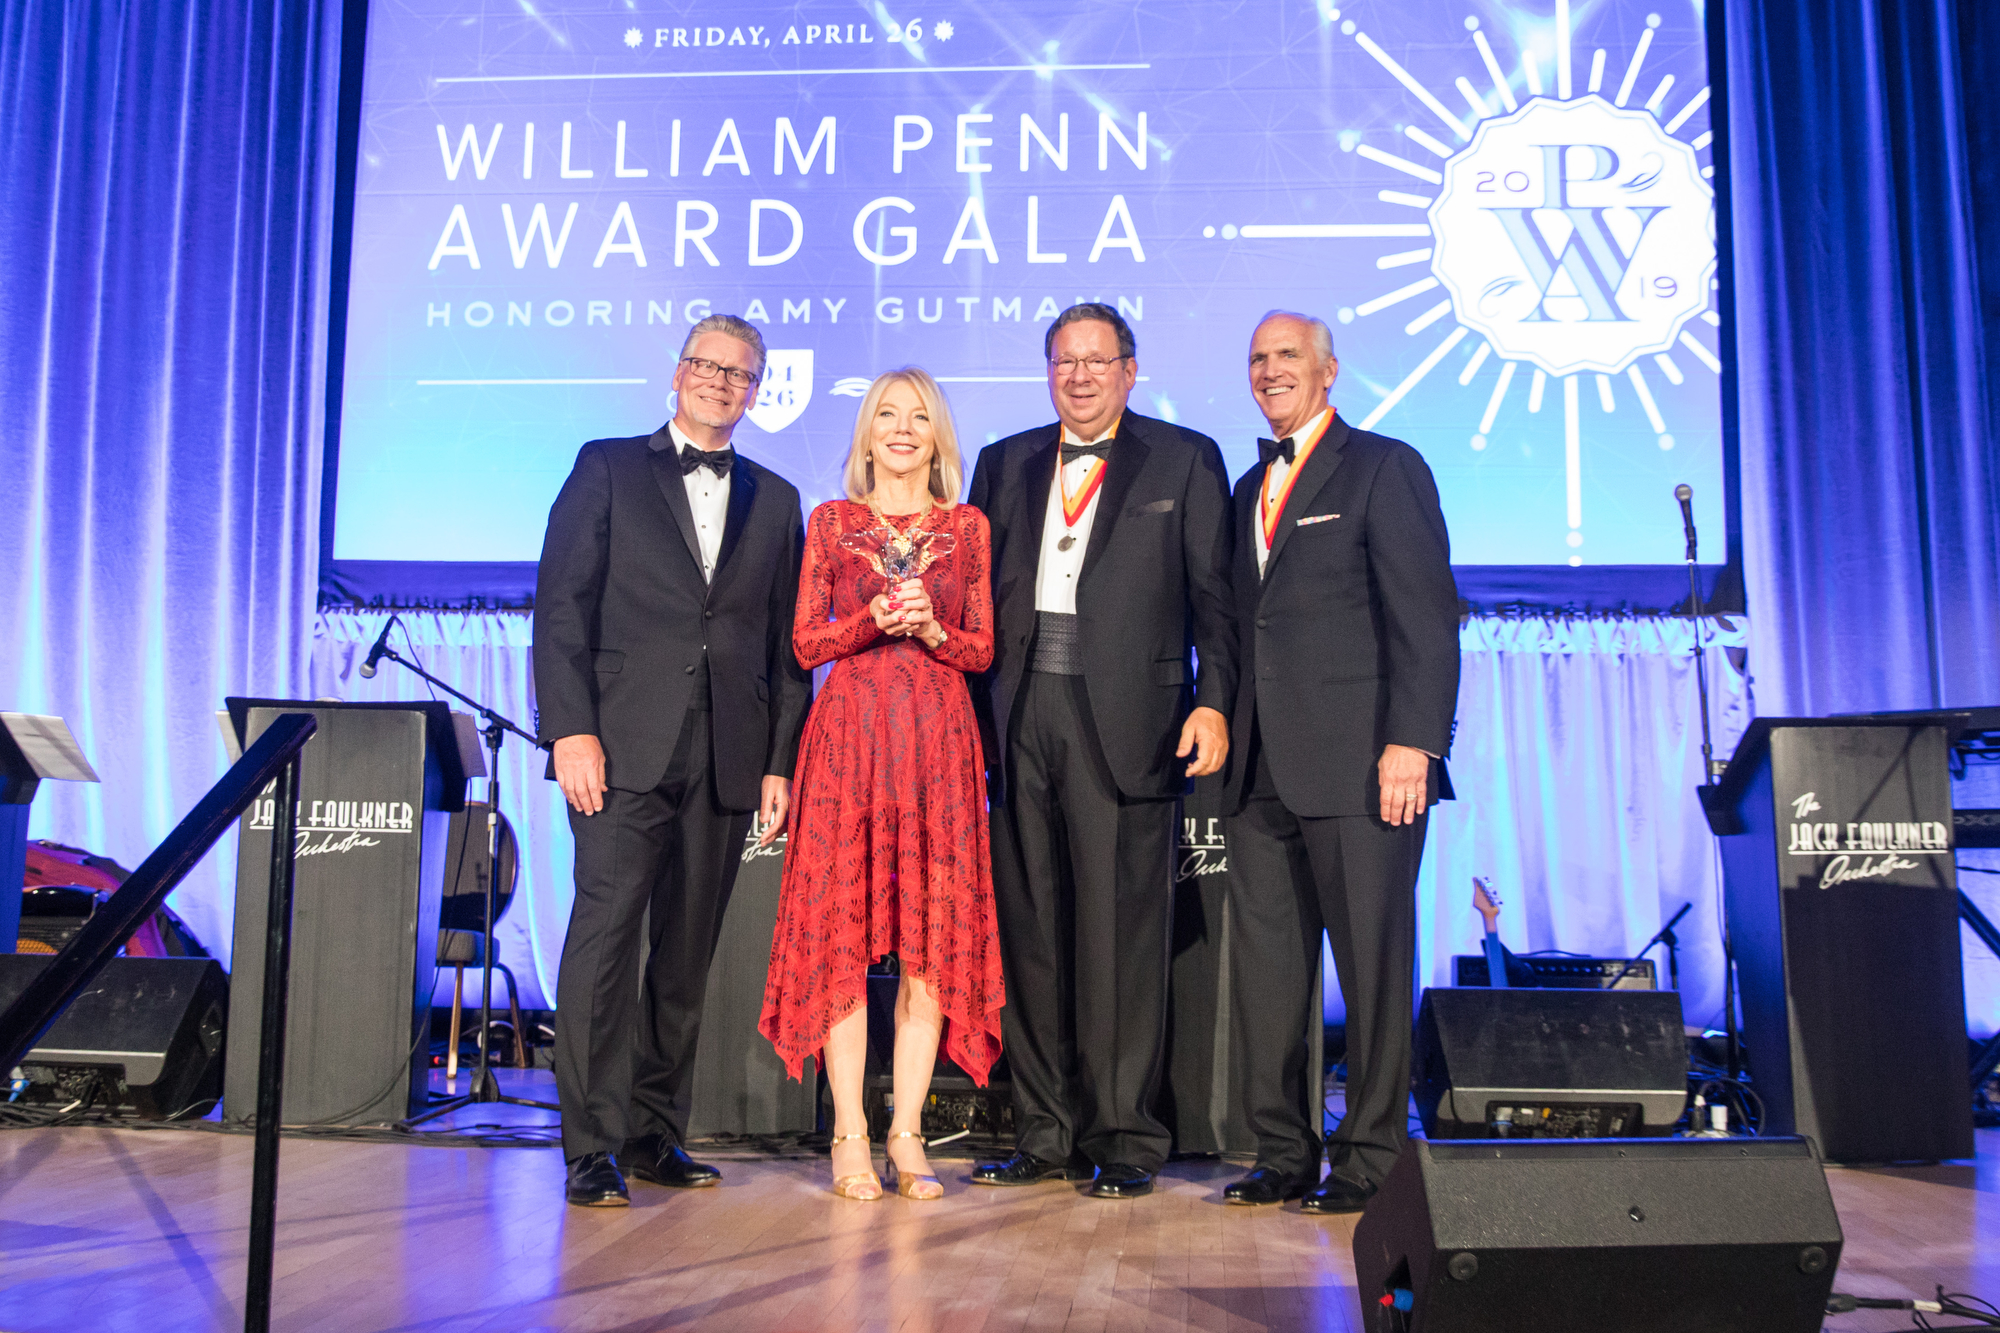 amy gutmann receiving william penn award